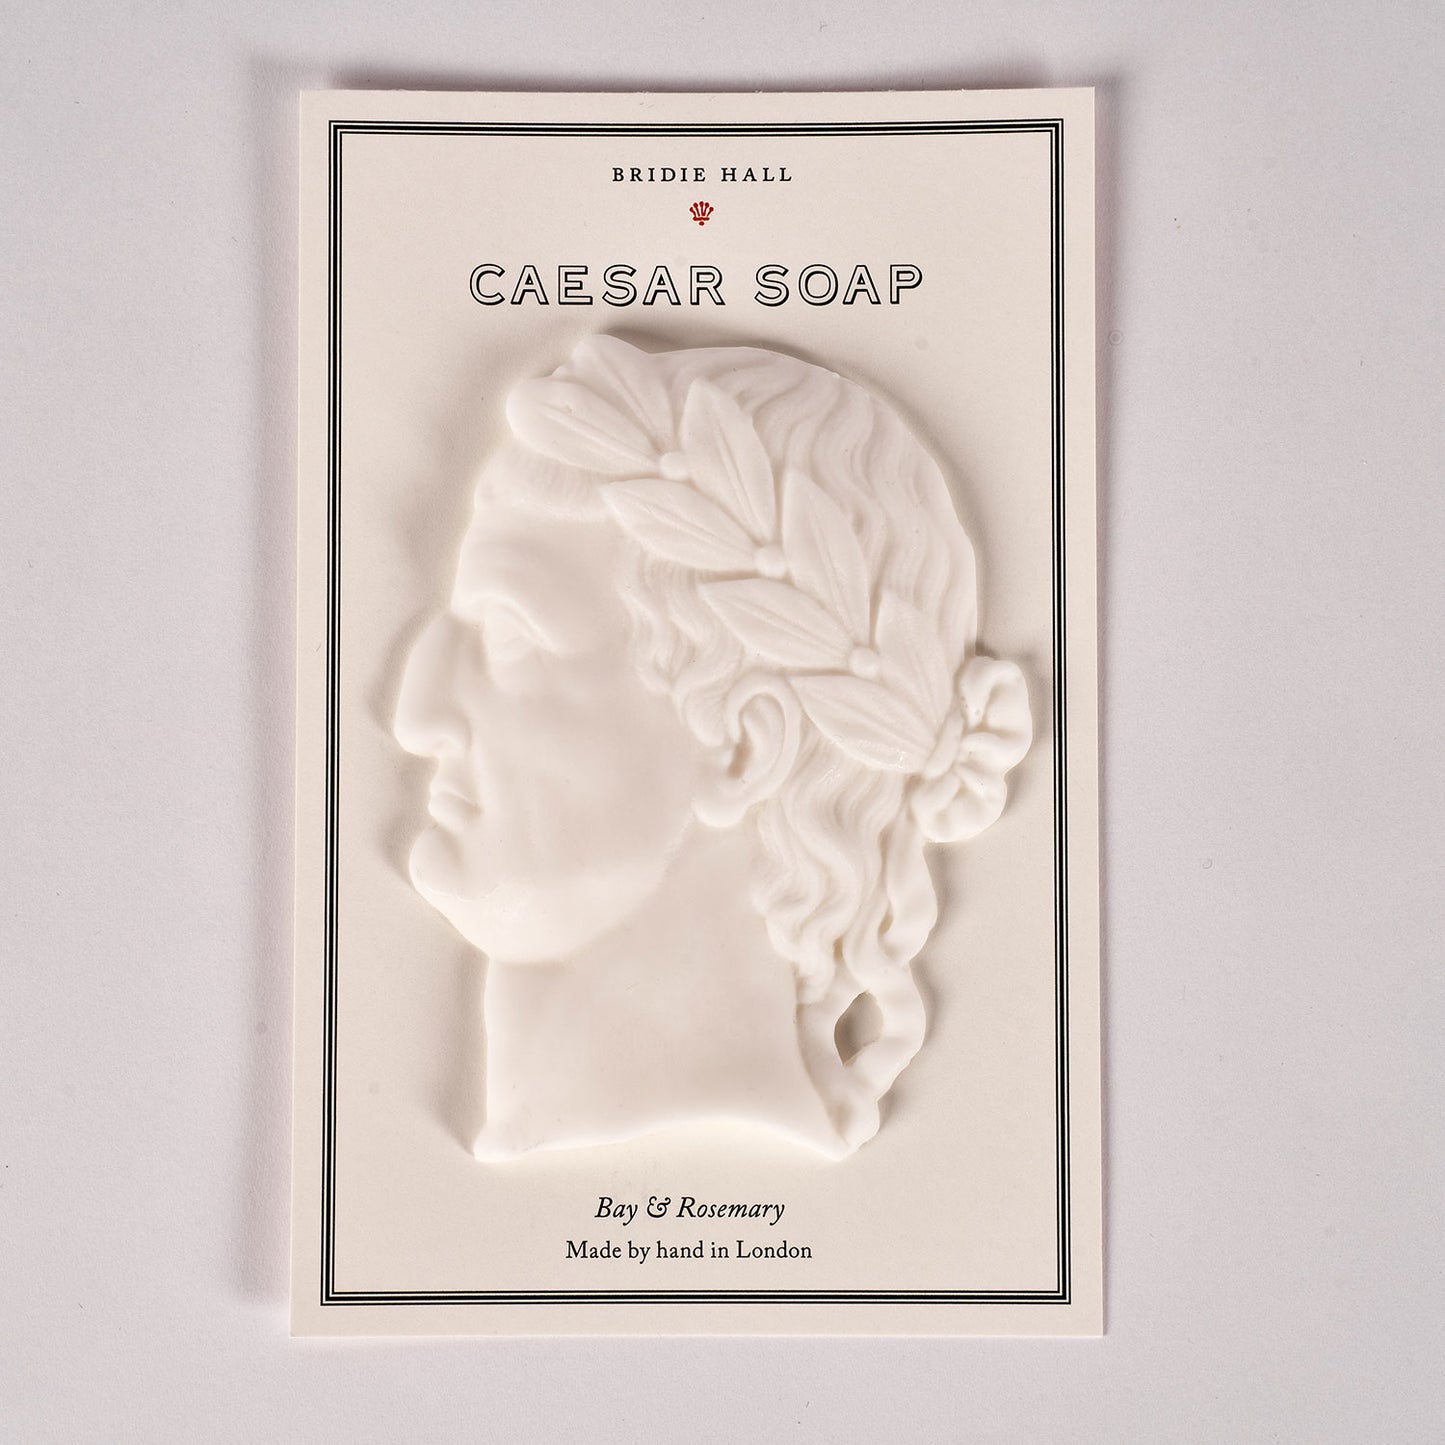 Bay & Rosemary Caesar Soap - GALBA